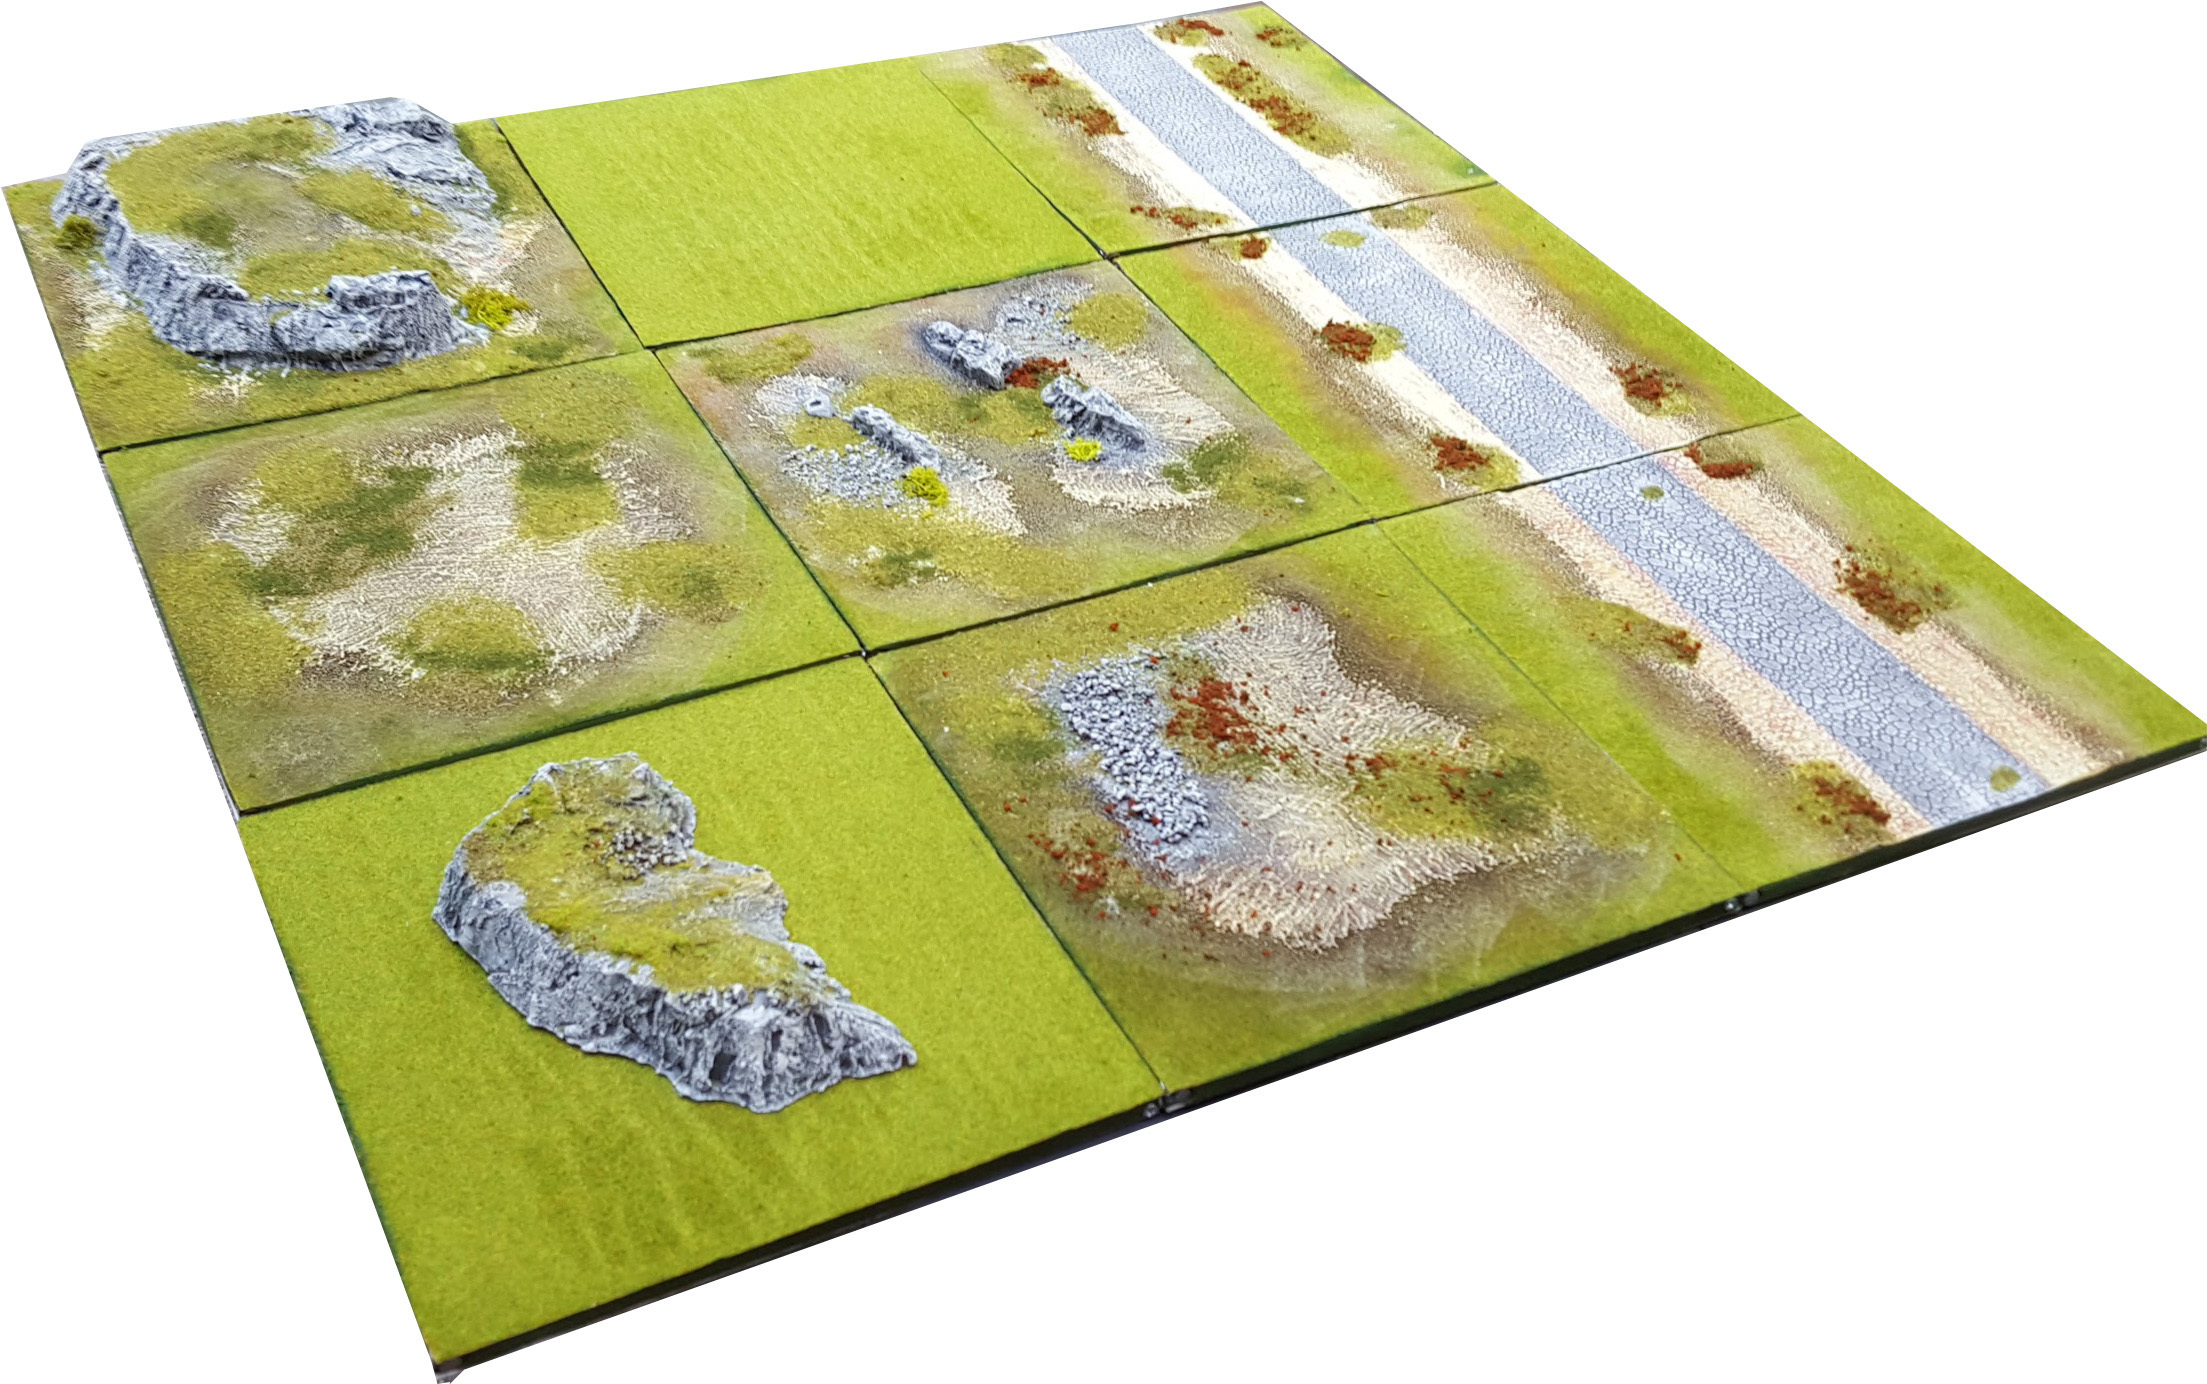 3 X3 Modular Painted Terrain Board For Wargames Rpgs